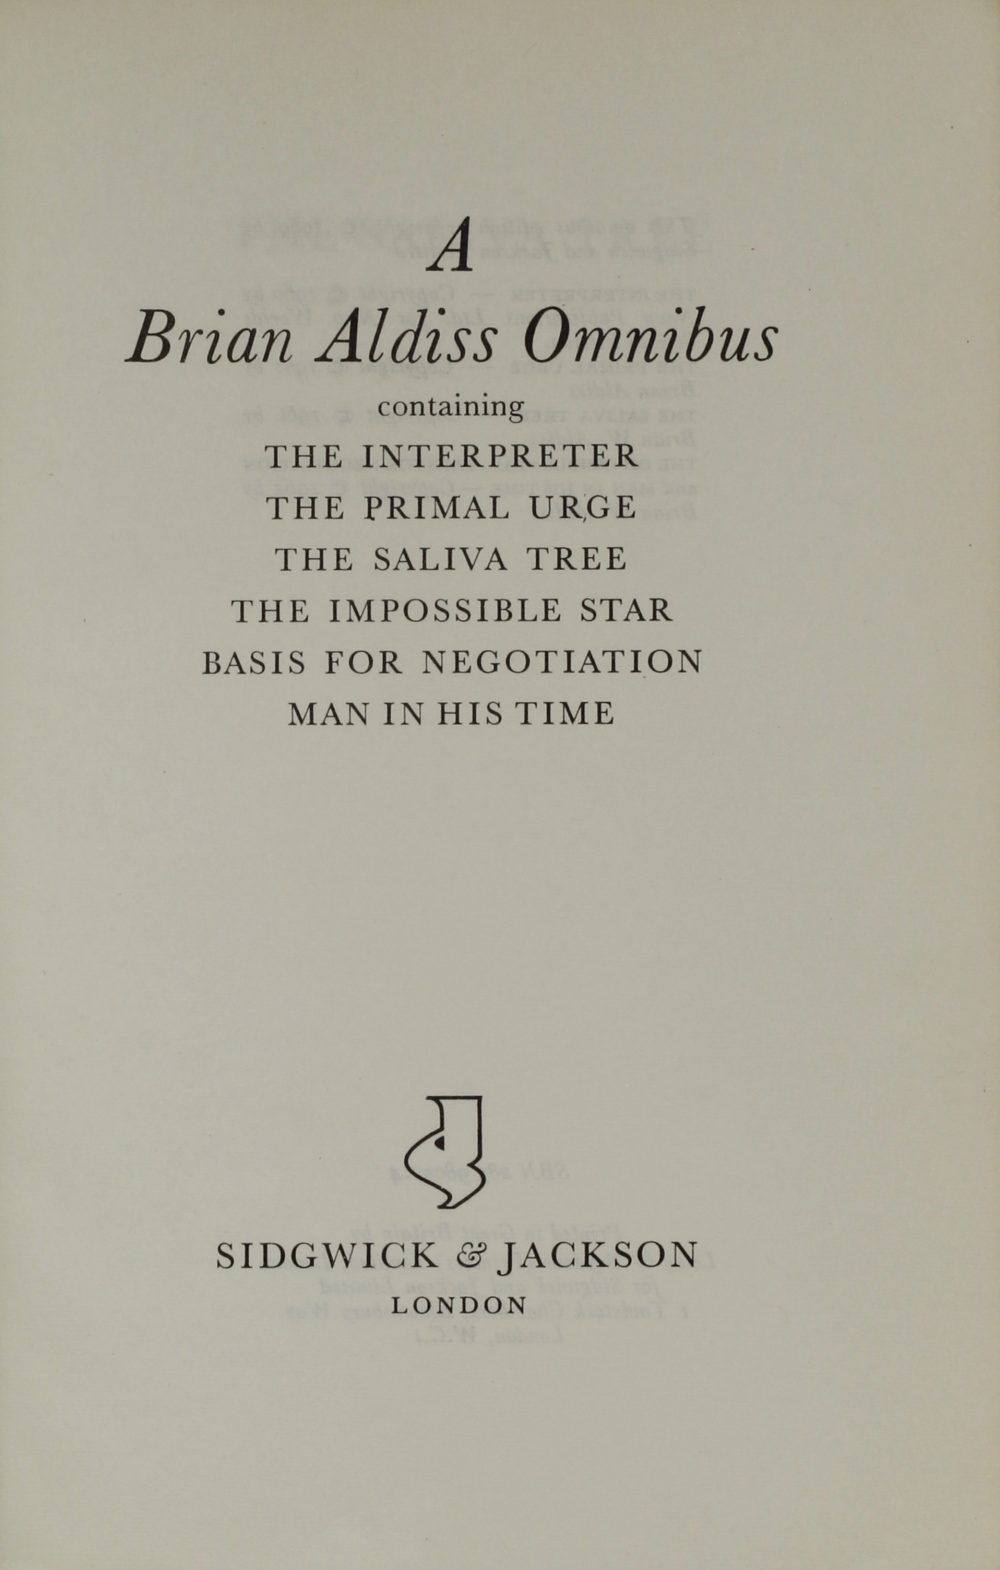 Brian Aldiss: A Brian Aldiss Omnibus, 1969 – proof. £49.50